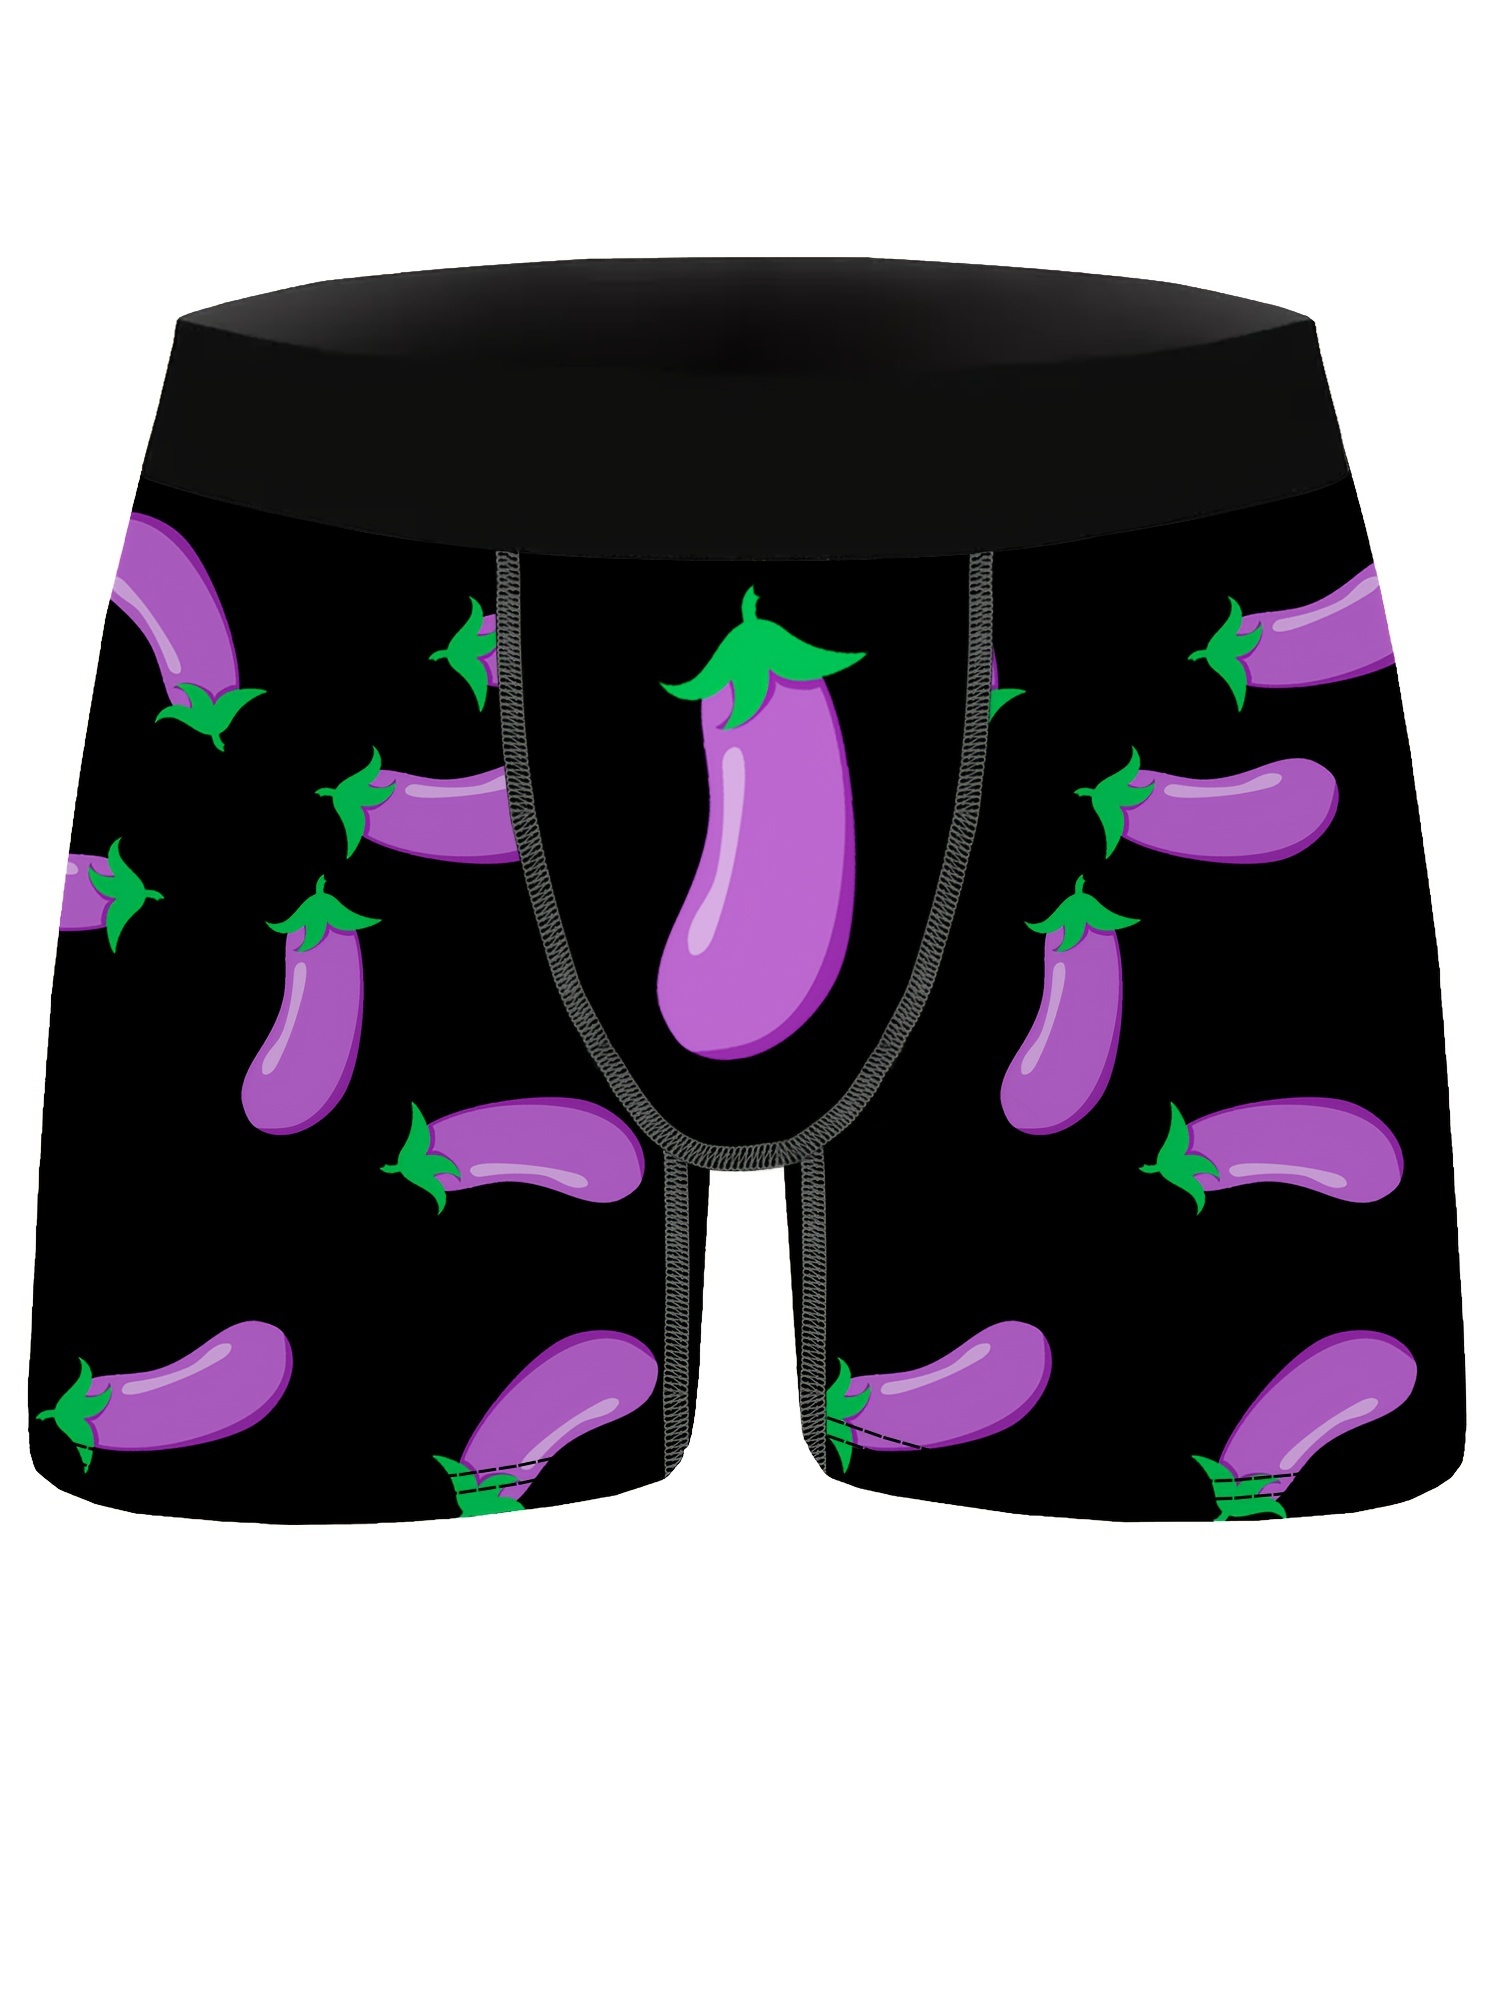 mens underwear purple eggplant print fashion novelty boxer briefs shorts breathable comfy high stretch boxer trunks details 0